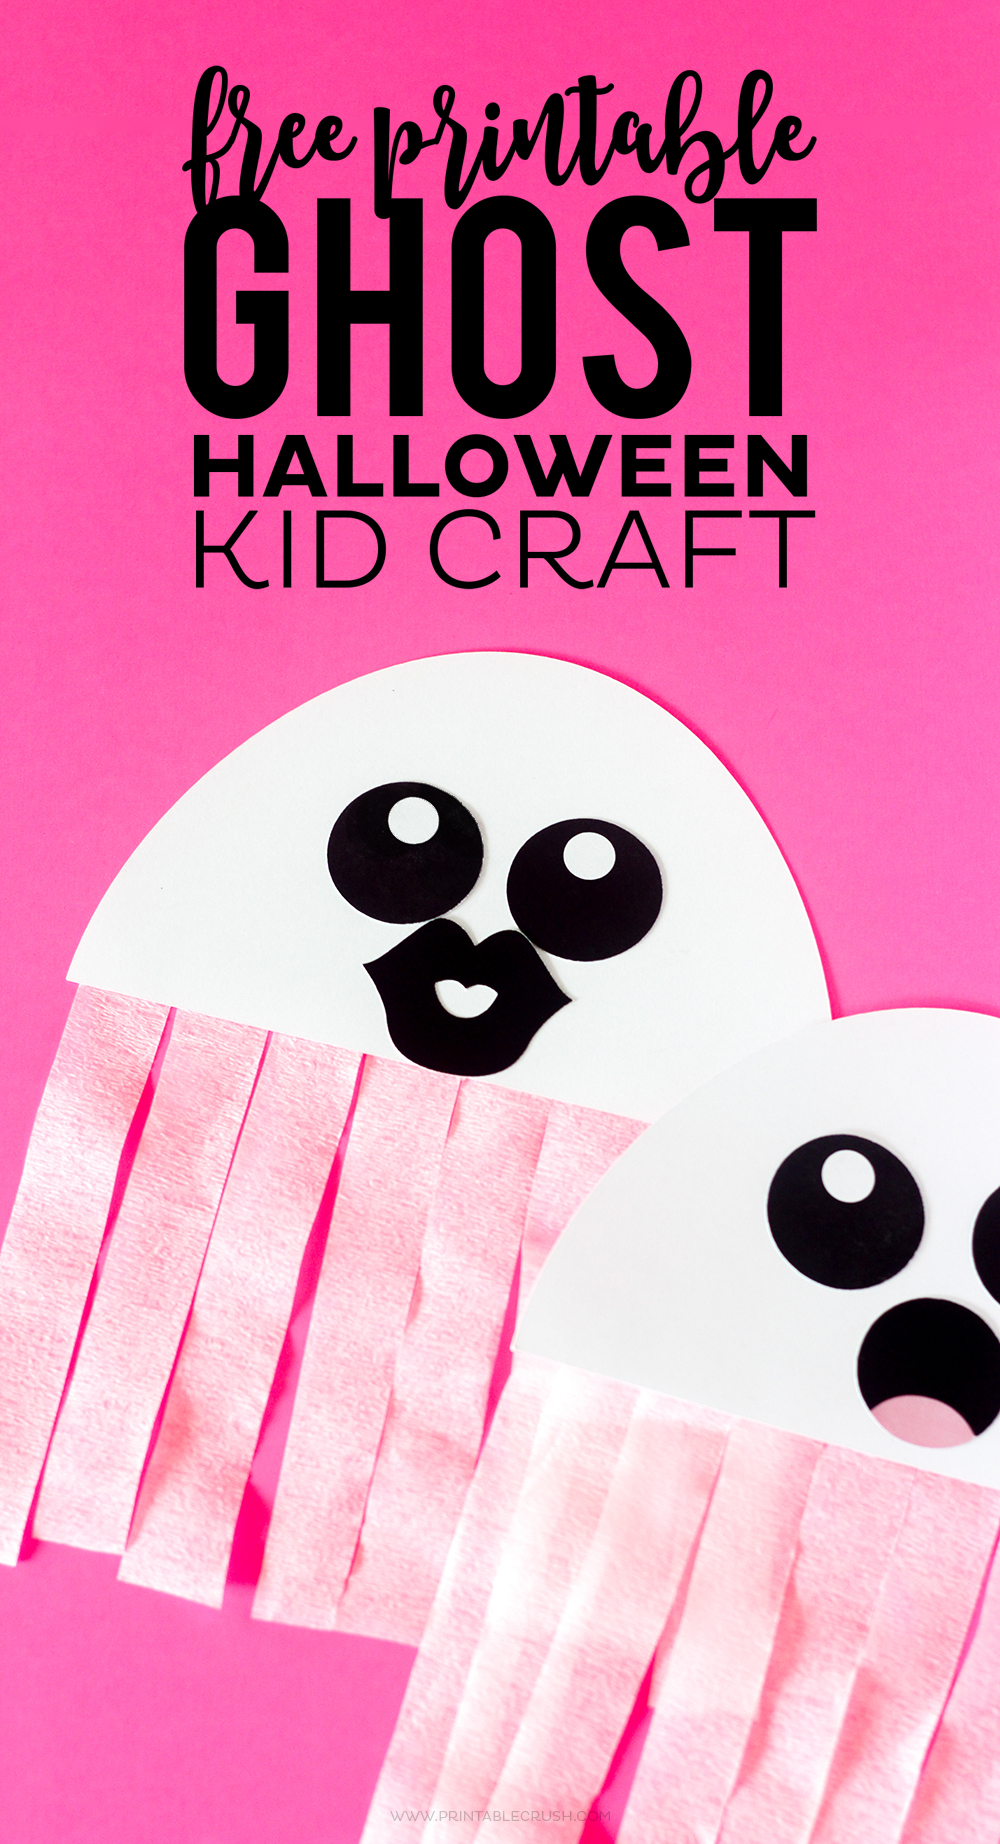 free-printable-ghost-halloween-craft-printable-crush